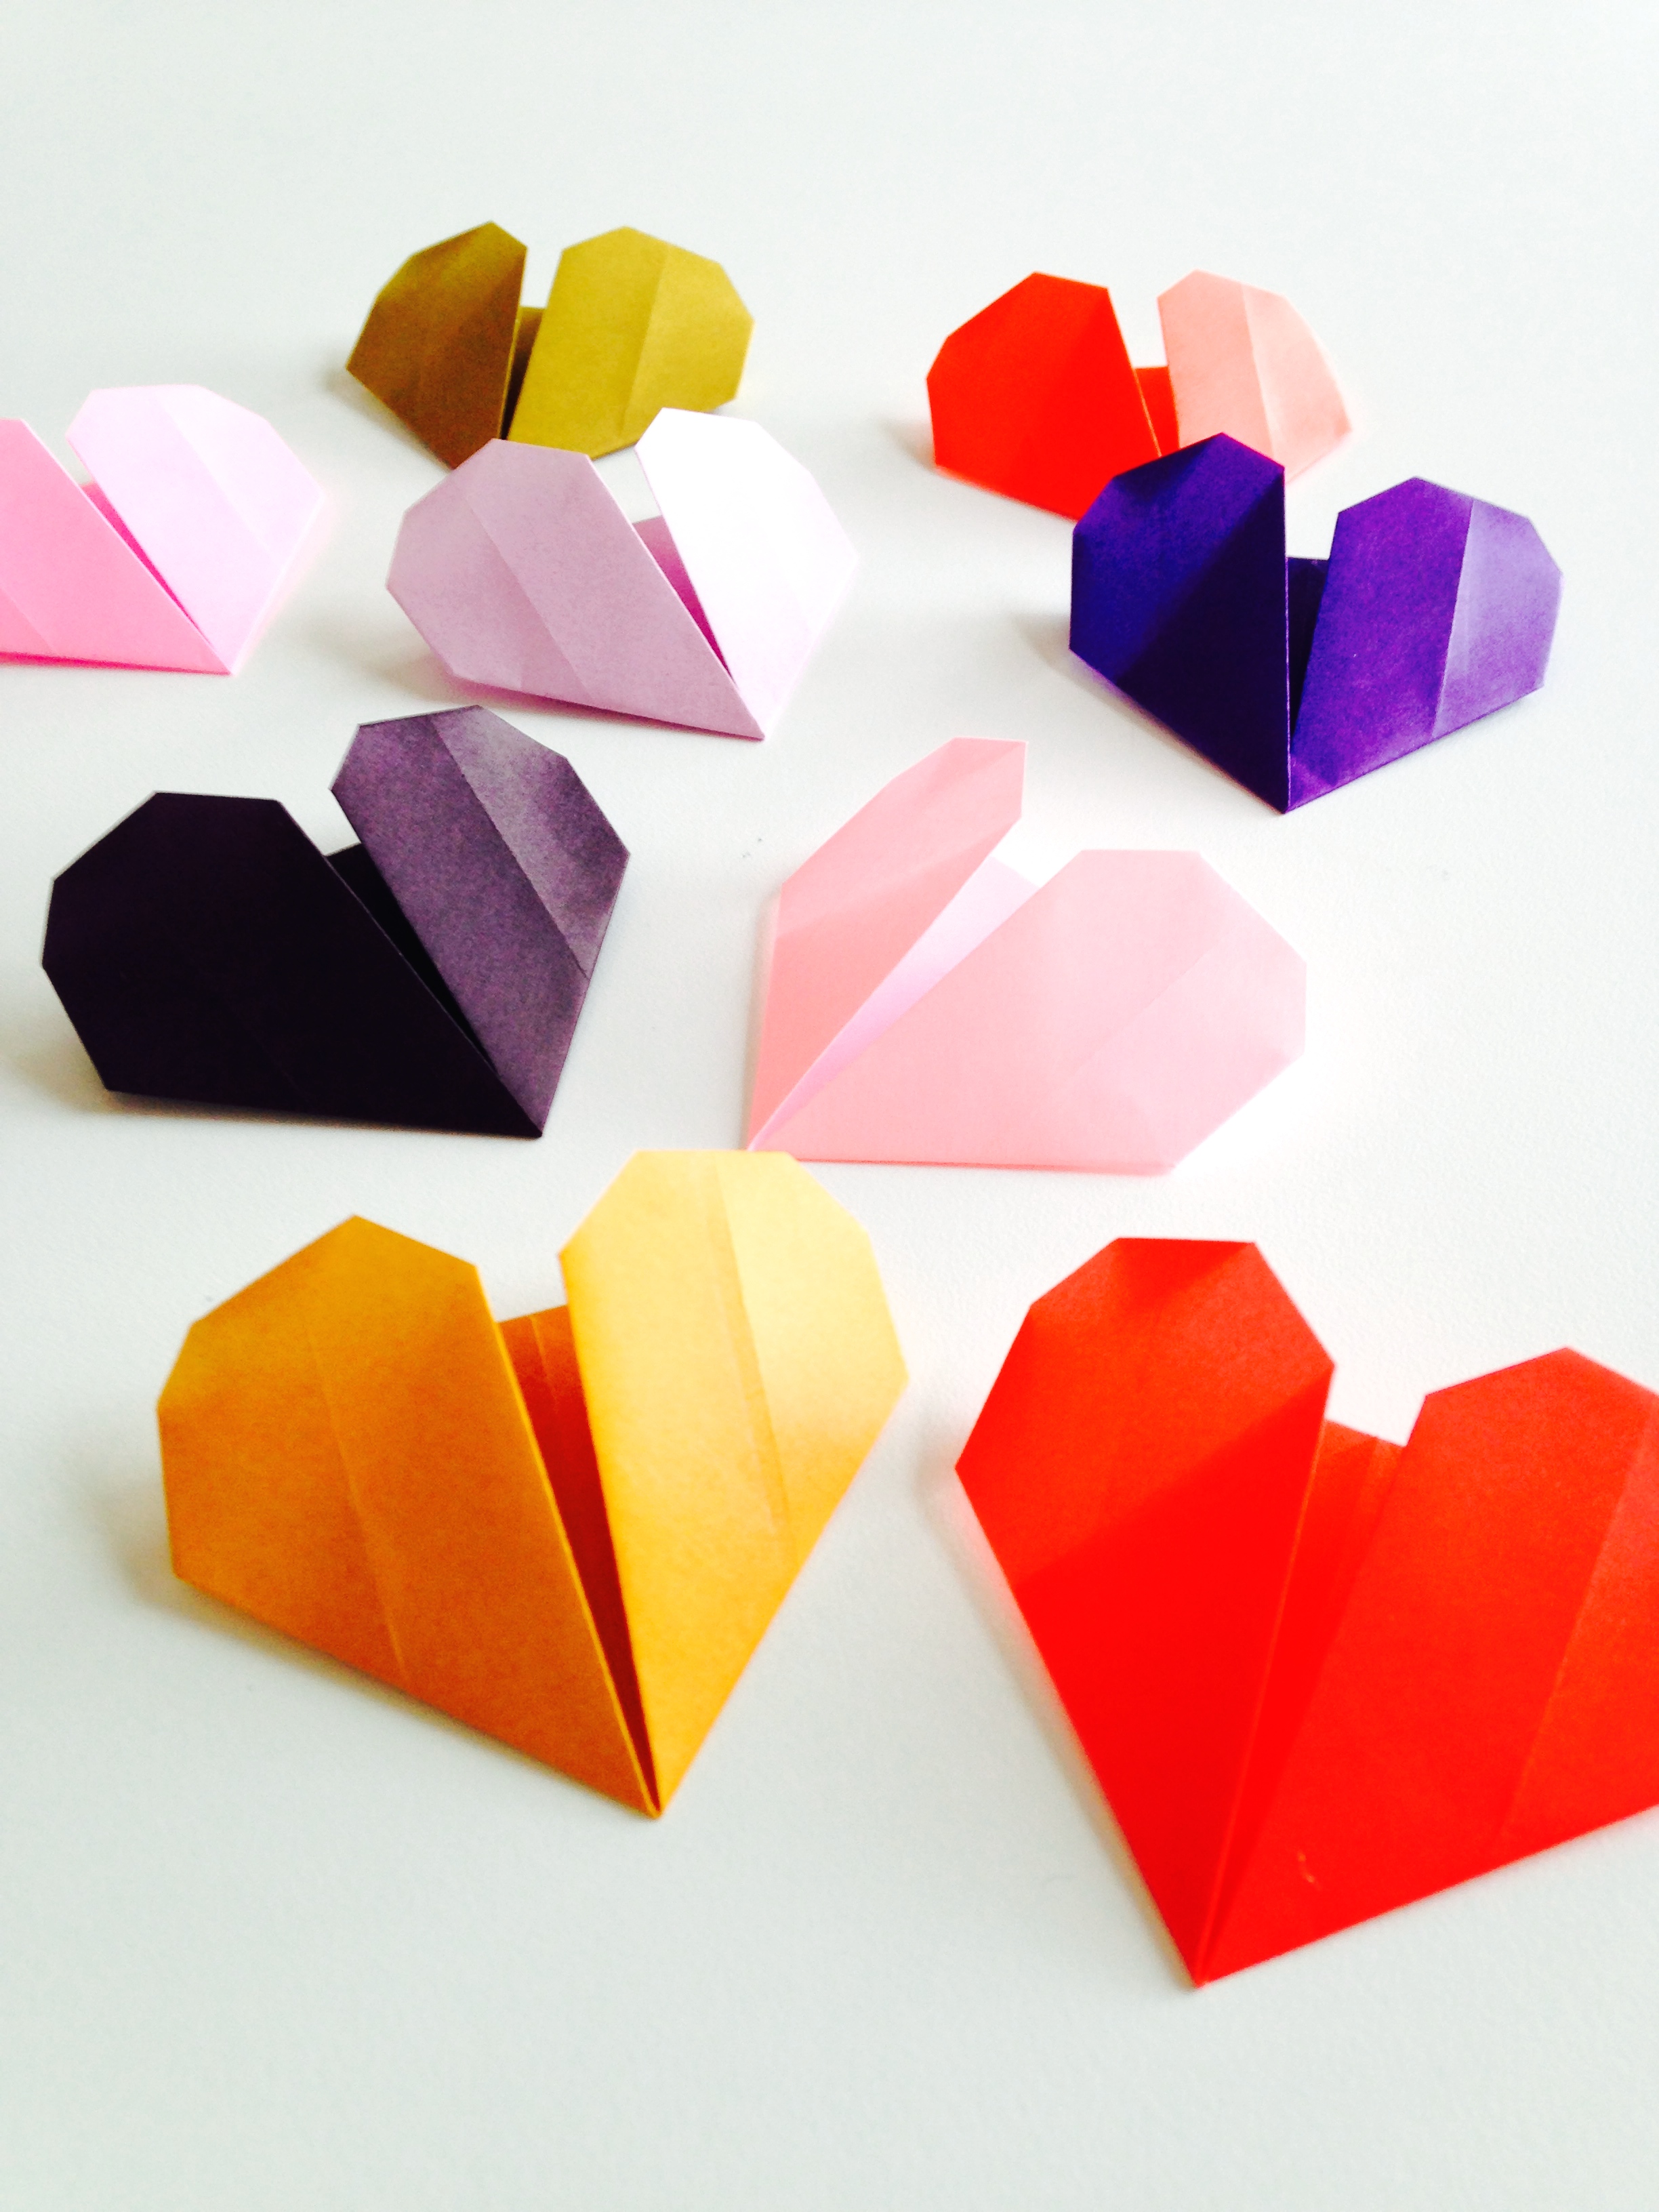 Make: Paper Hearts